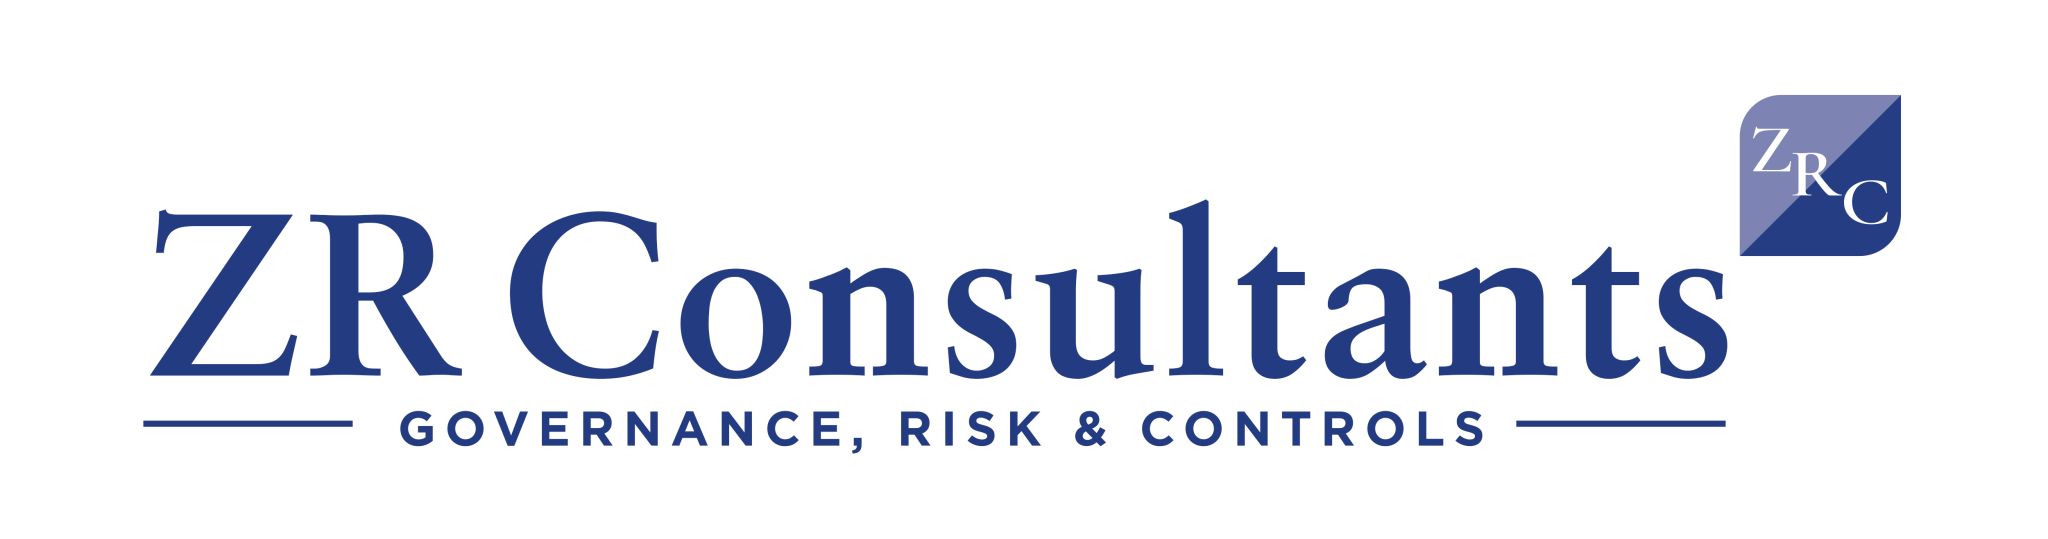 zr-consultants-logo